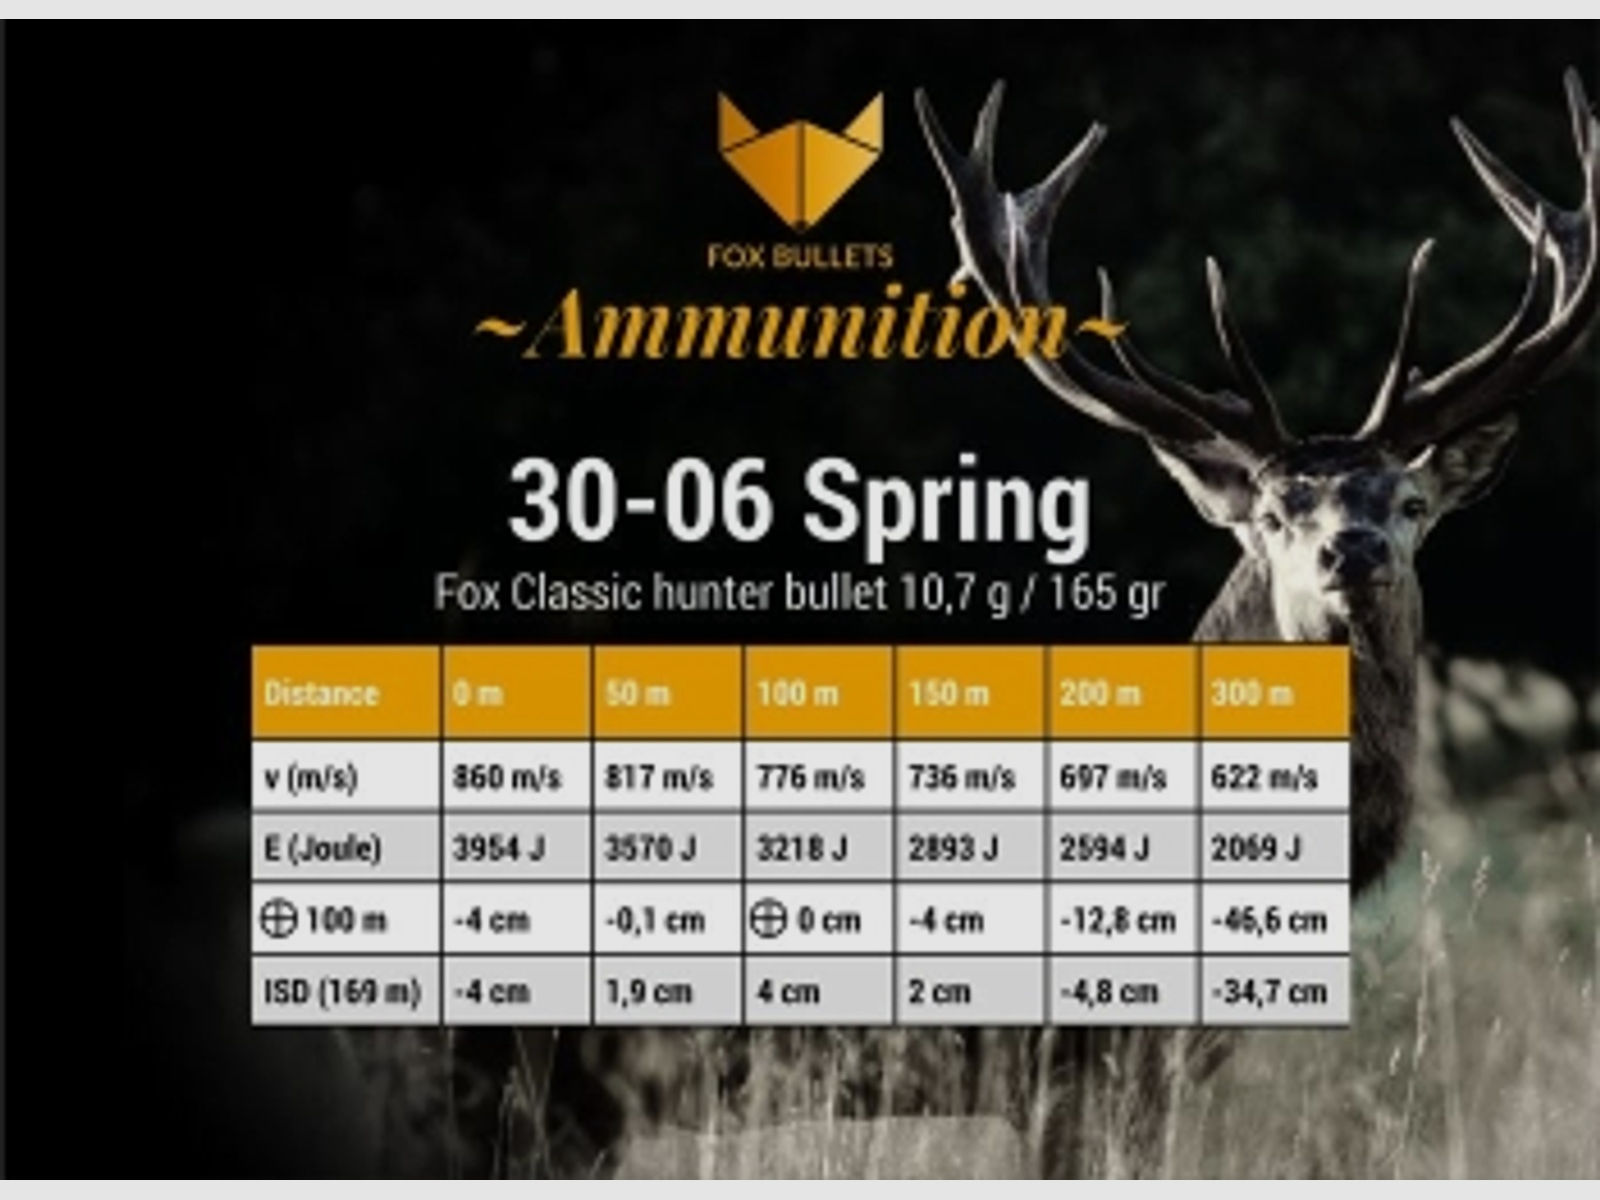 Fox Bullets Classic Hunter .30-06 Sprg. 165GR / 10,7g bleifrei 20 Patronen